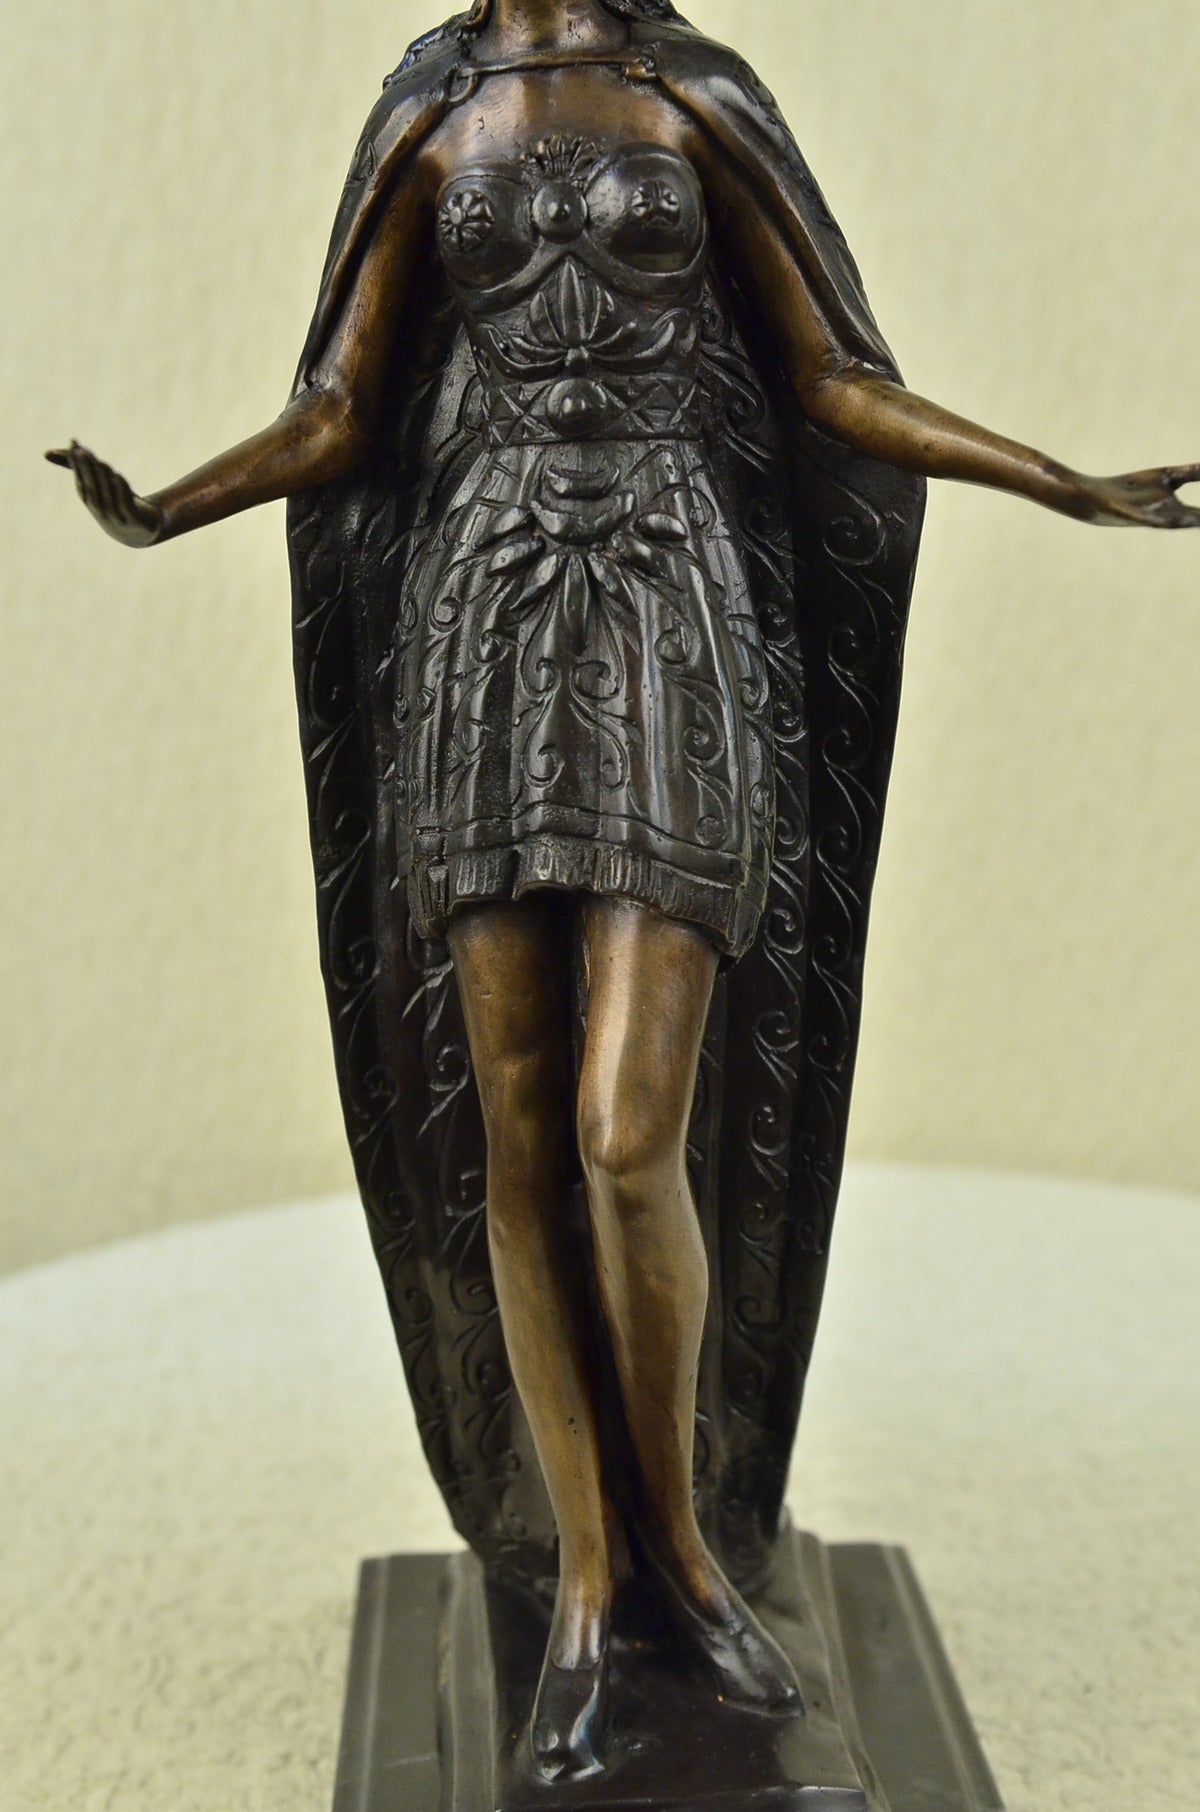 Handcrafted bronze sculpture SALE Sal Cast Hot Gladiator Coliseum Warrior Roman